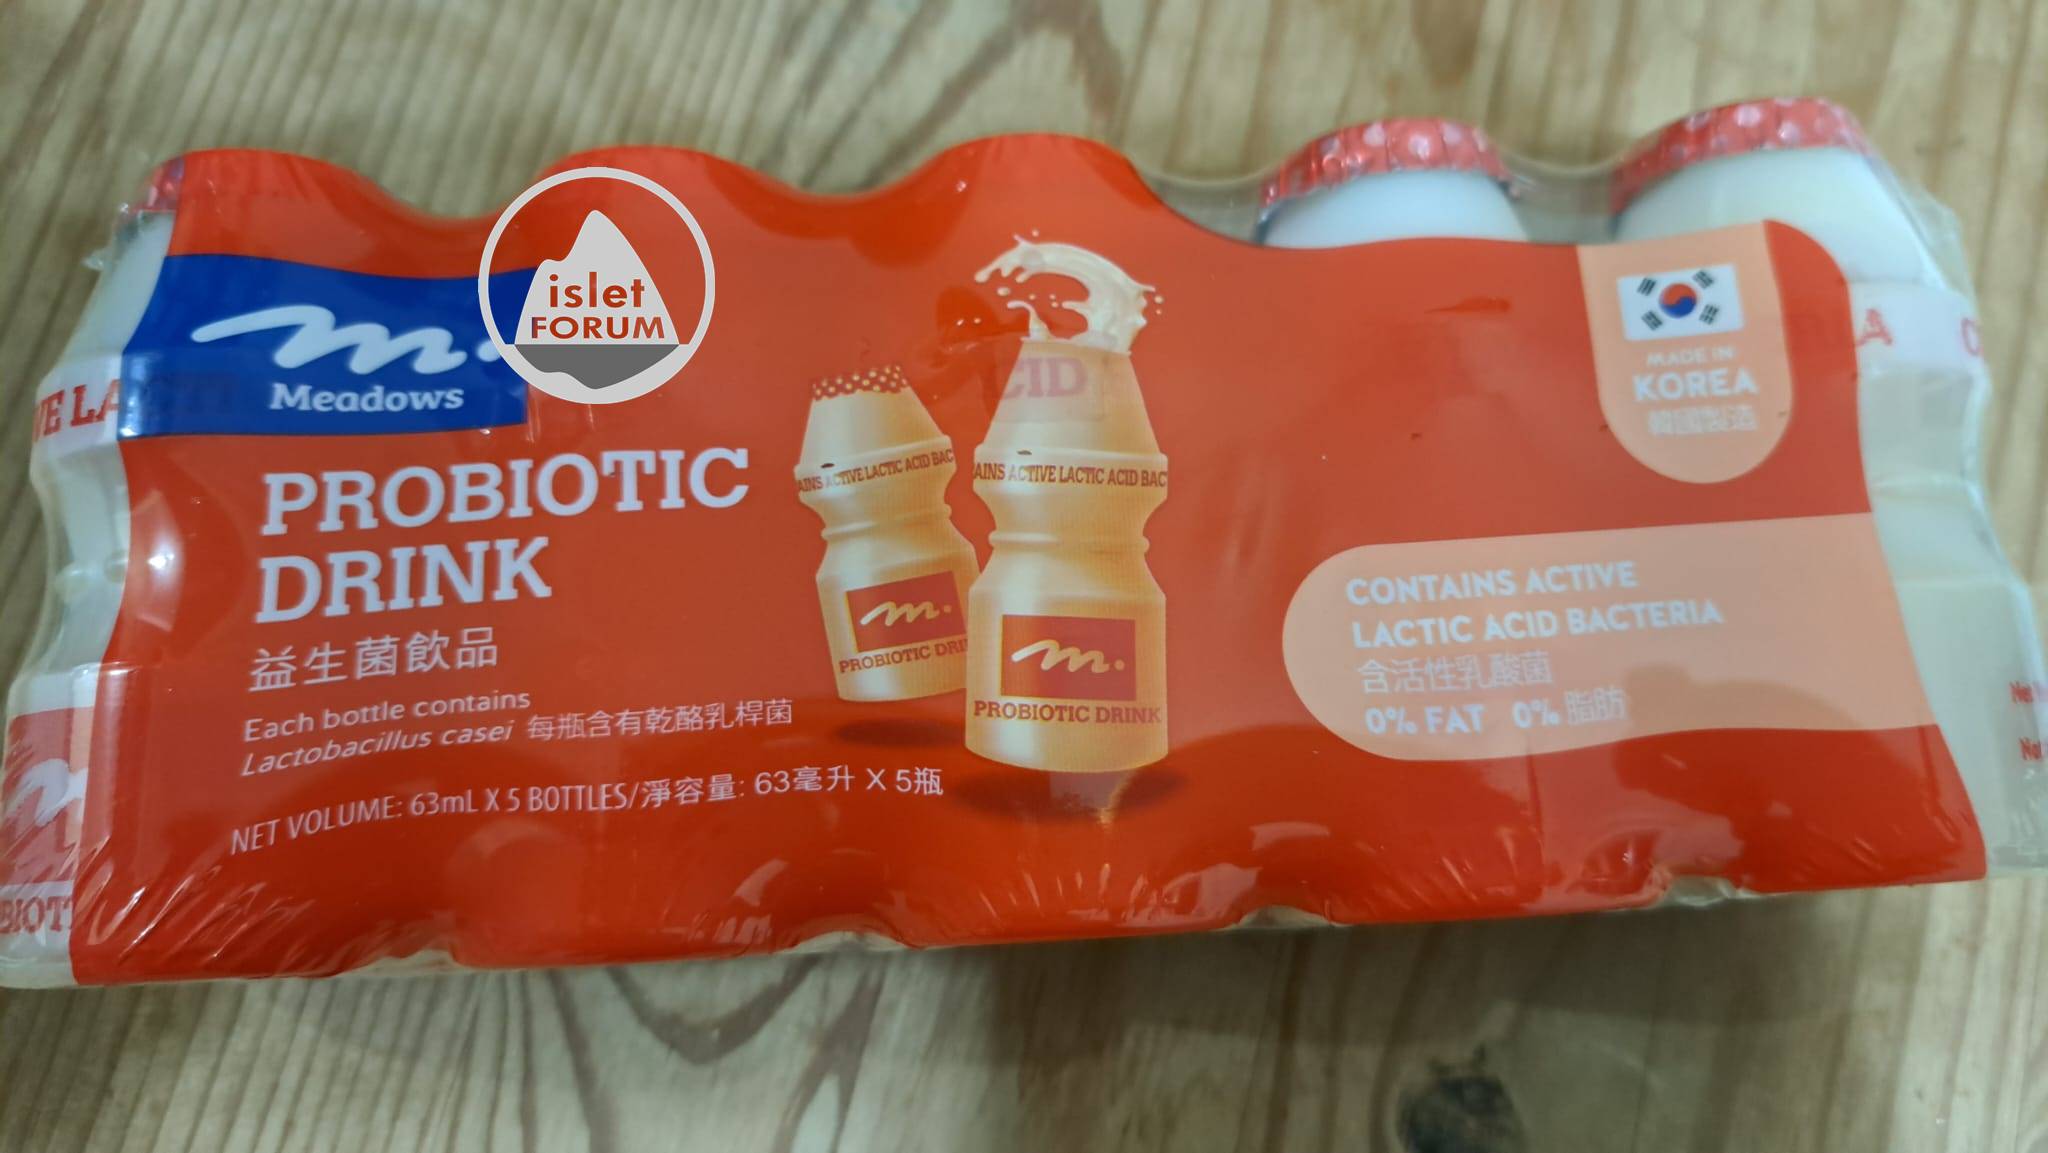 meadows probiotics drink, HK.50 益生菌飲品63ml X 5 (1).jpeg